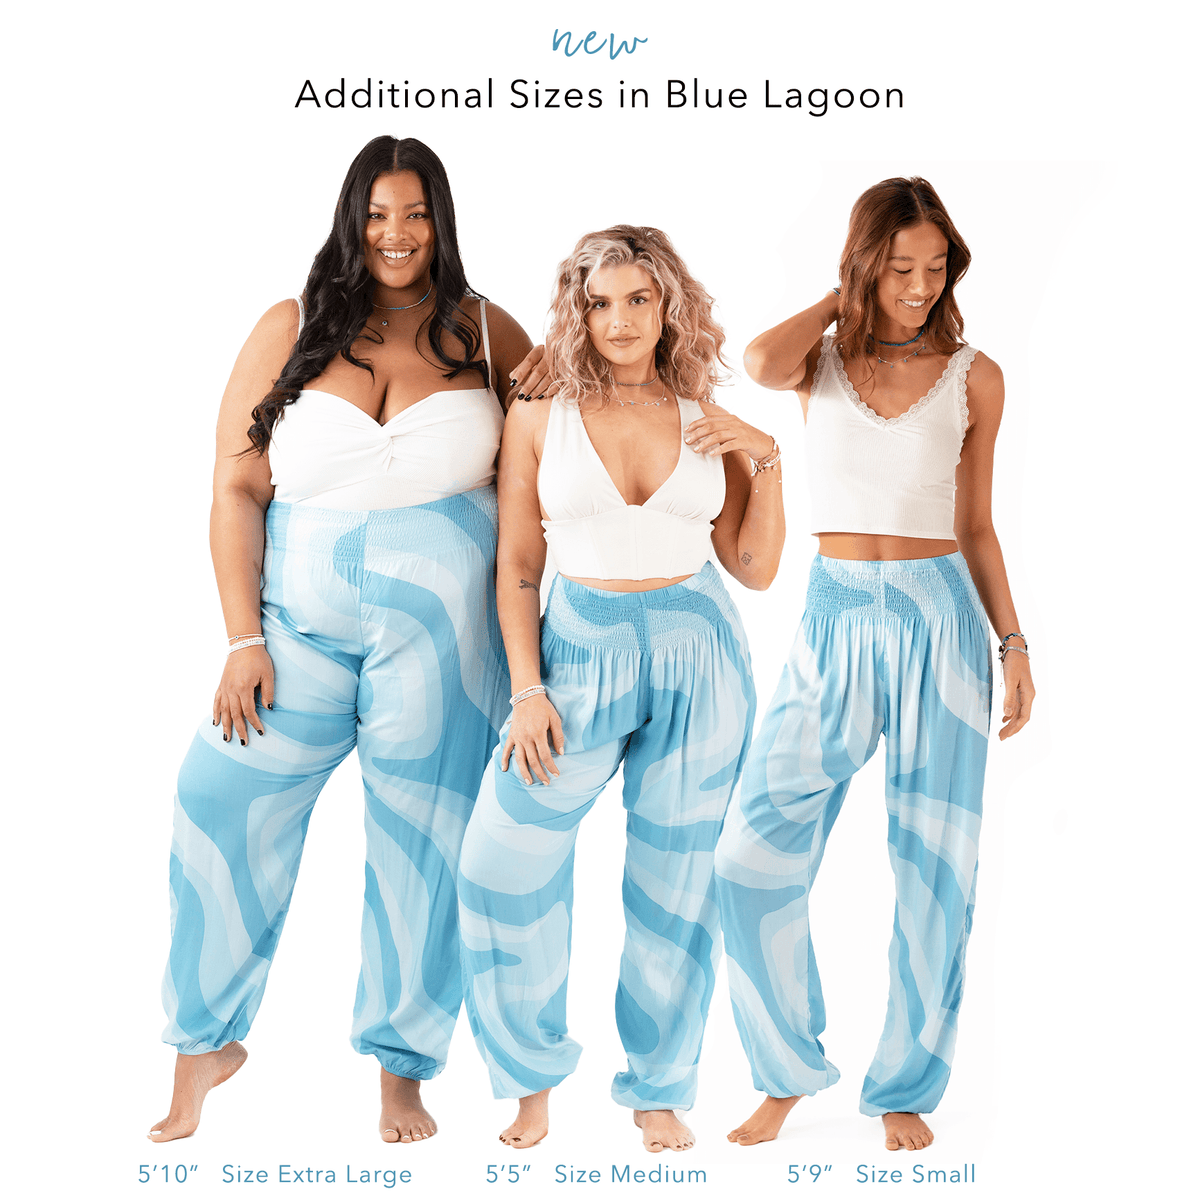 Three models of different sizes wearing blue swirl harem pants